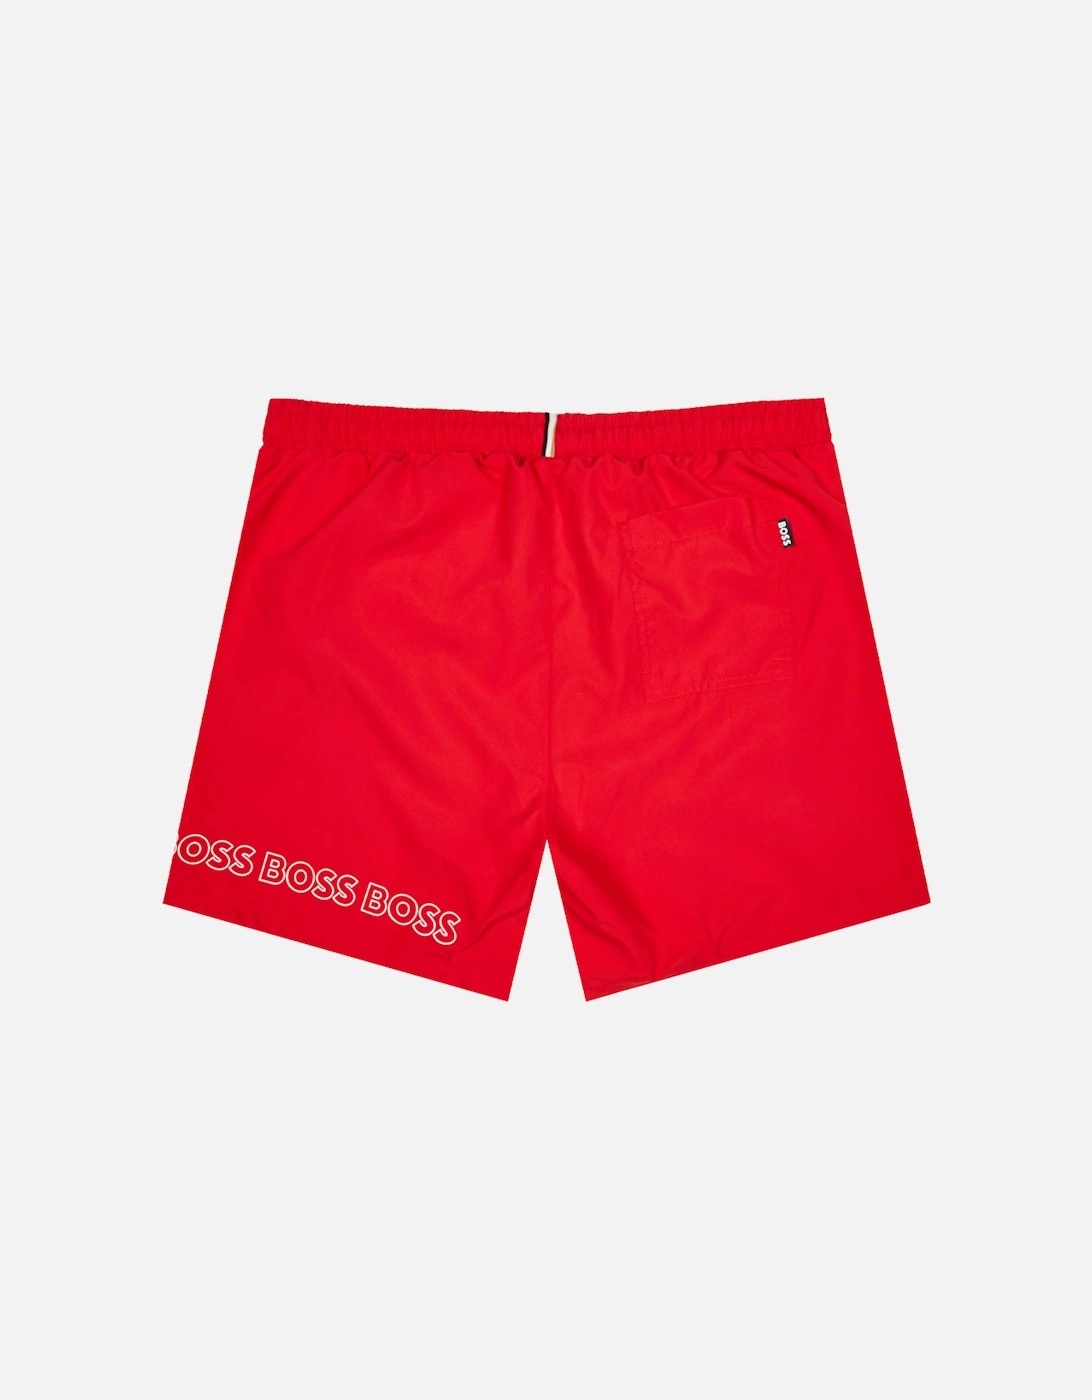 Dolphin Swim Shorts - Bright Red